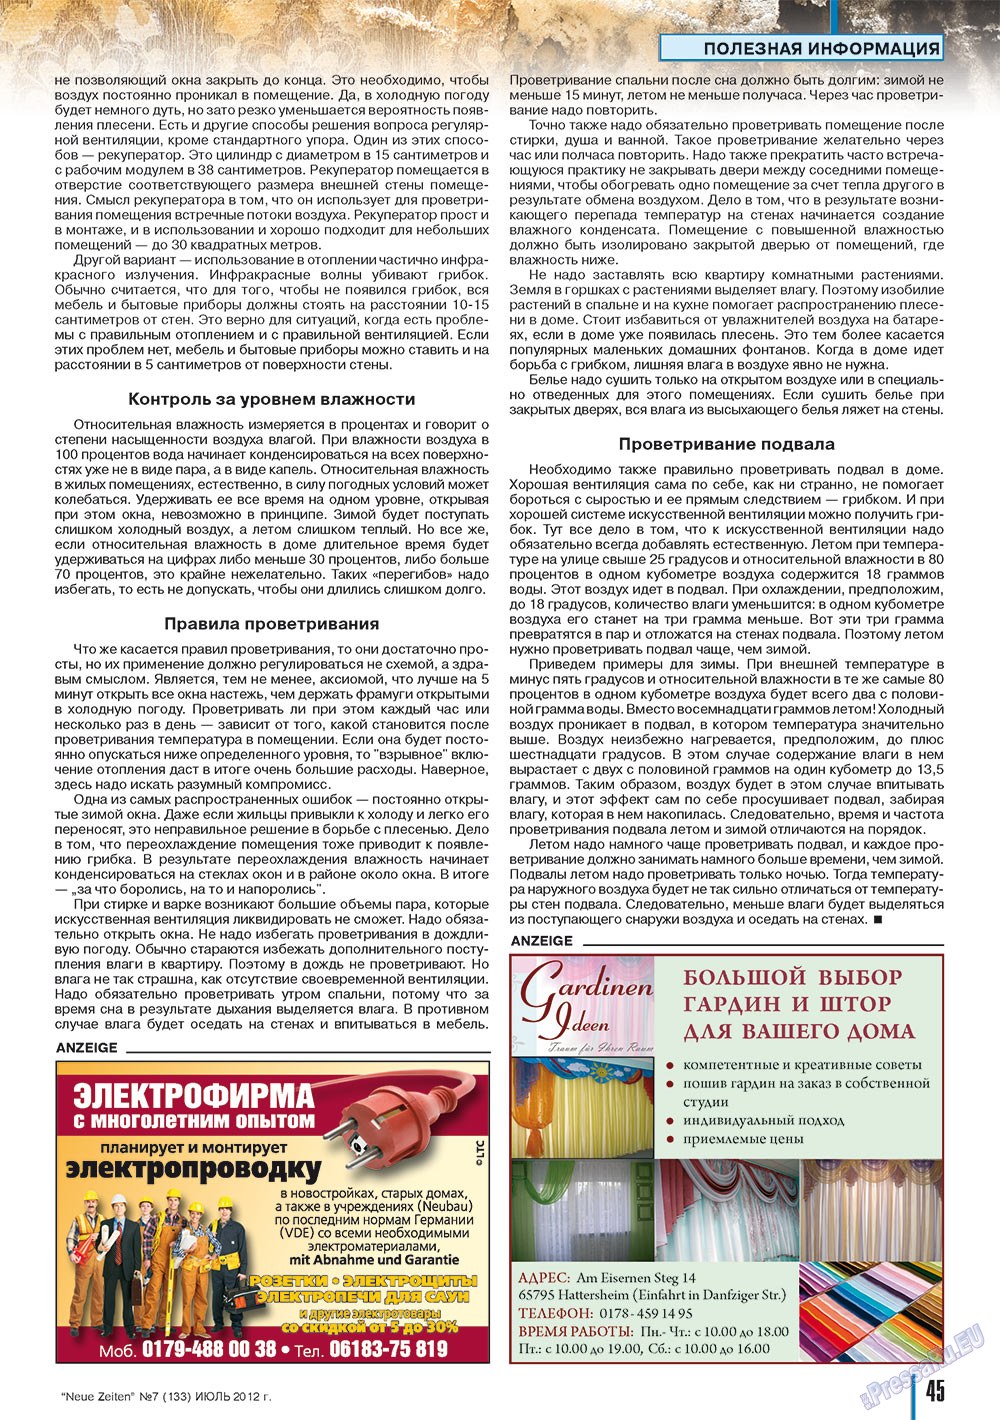 Neue Zeiten (журнал). 2012 год, номер 7, стр. 45